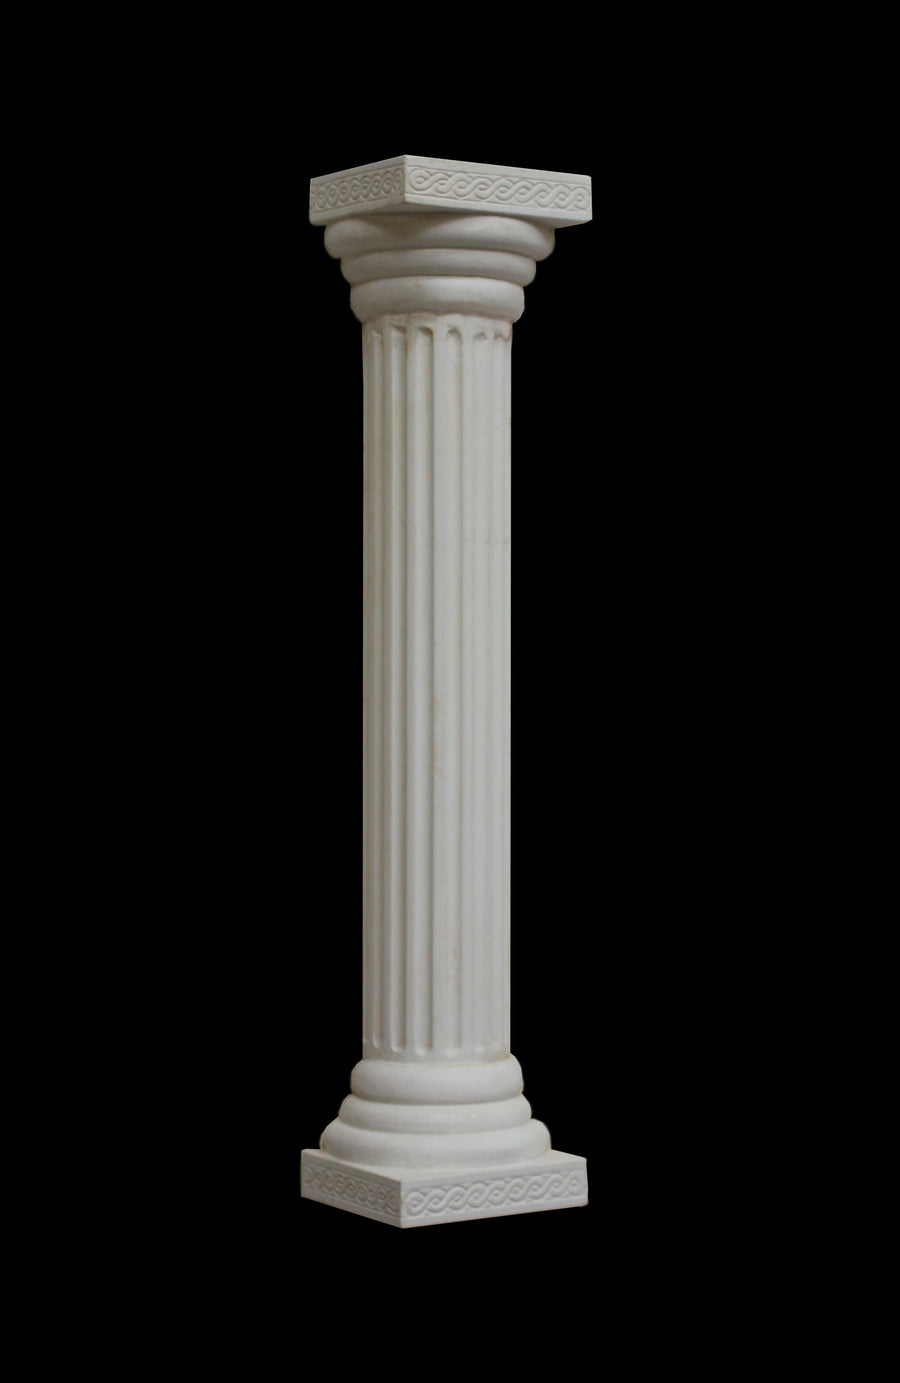 photo with black background of plaster cast sculpture of Greek half round column